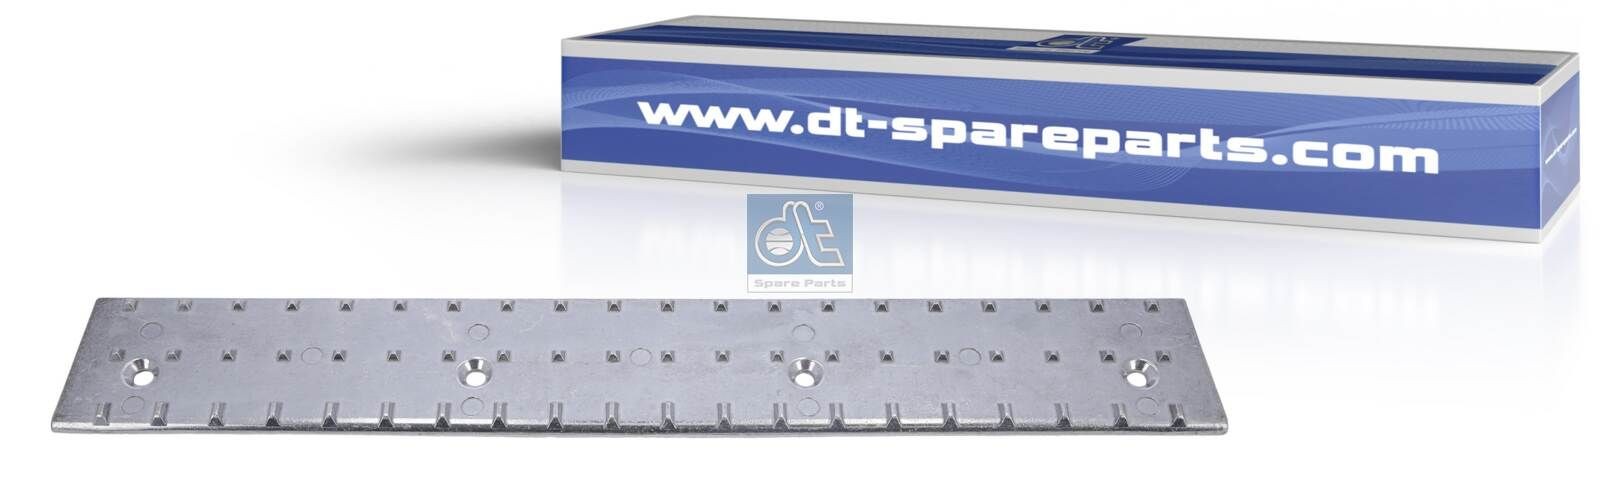 5.16094 DT Spare Parts Trittbrett DAF 75